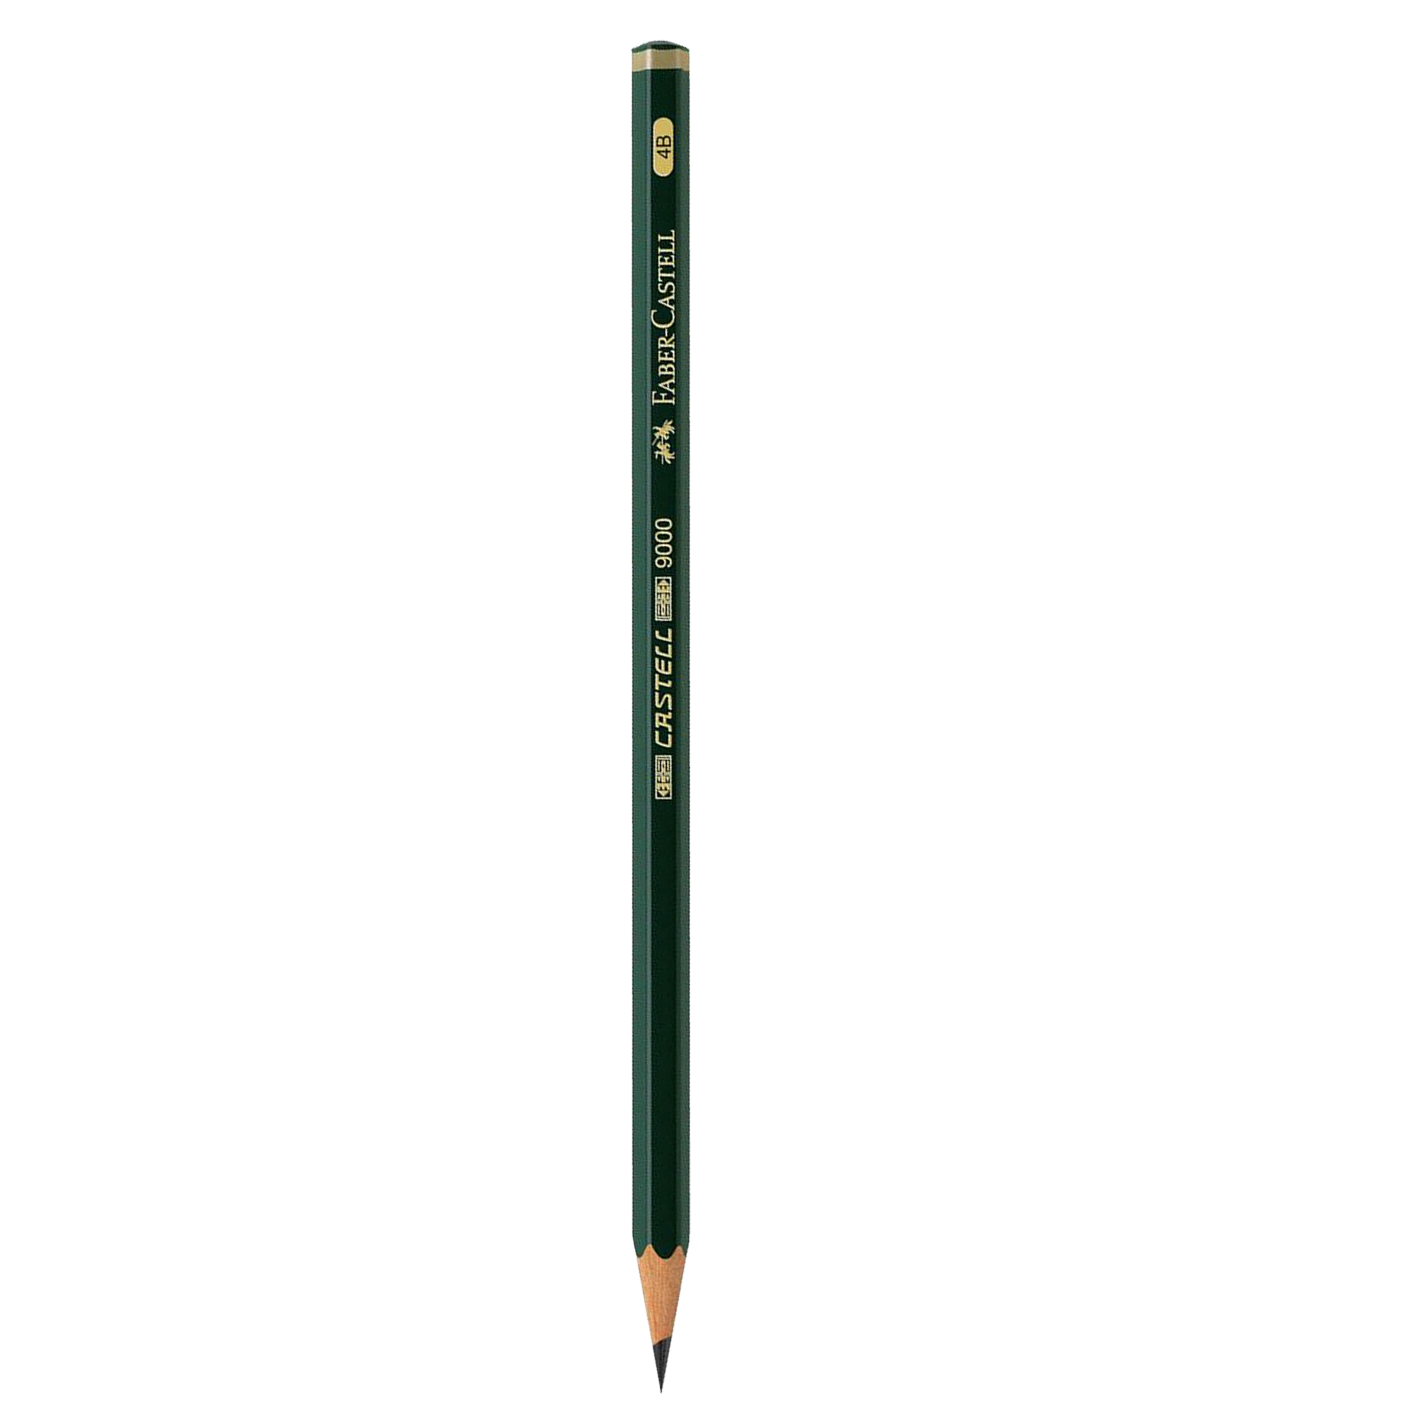 Faber-Castell Artist Grade Pencil Castell 9000 4B